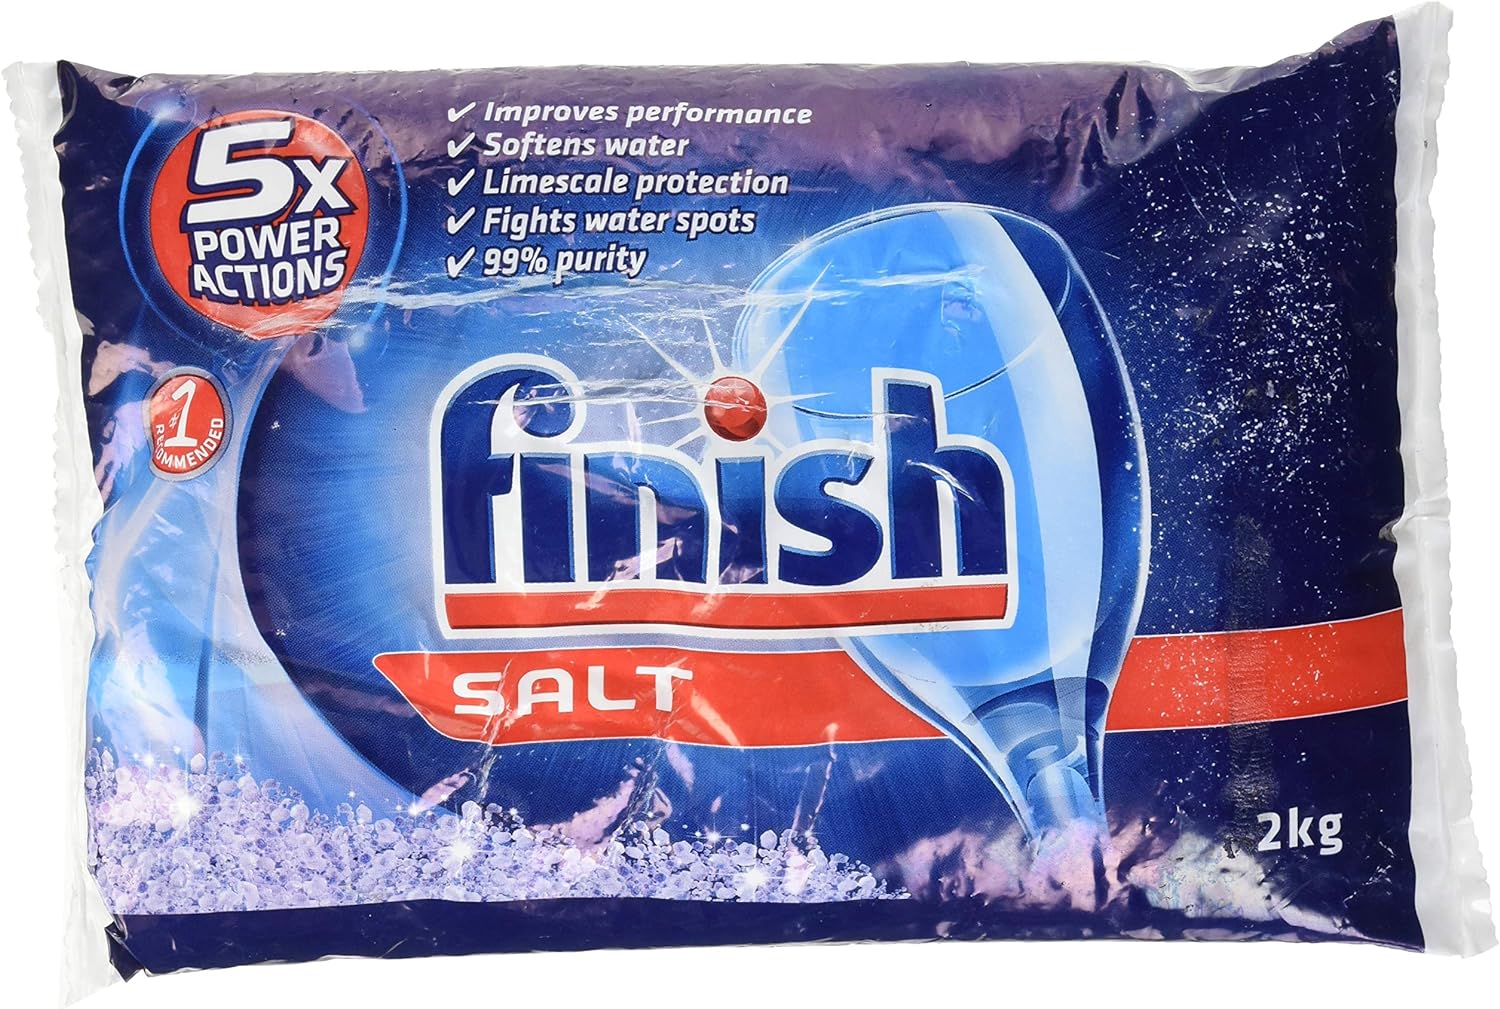 Bosch Finish SGZ9091UC Dishwasher Salt - 2Kg (Package may vary)